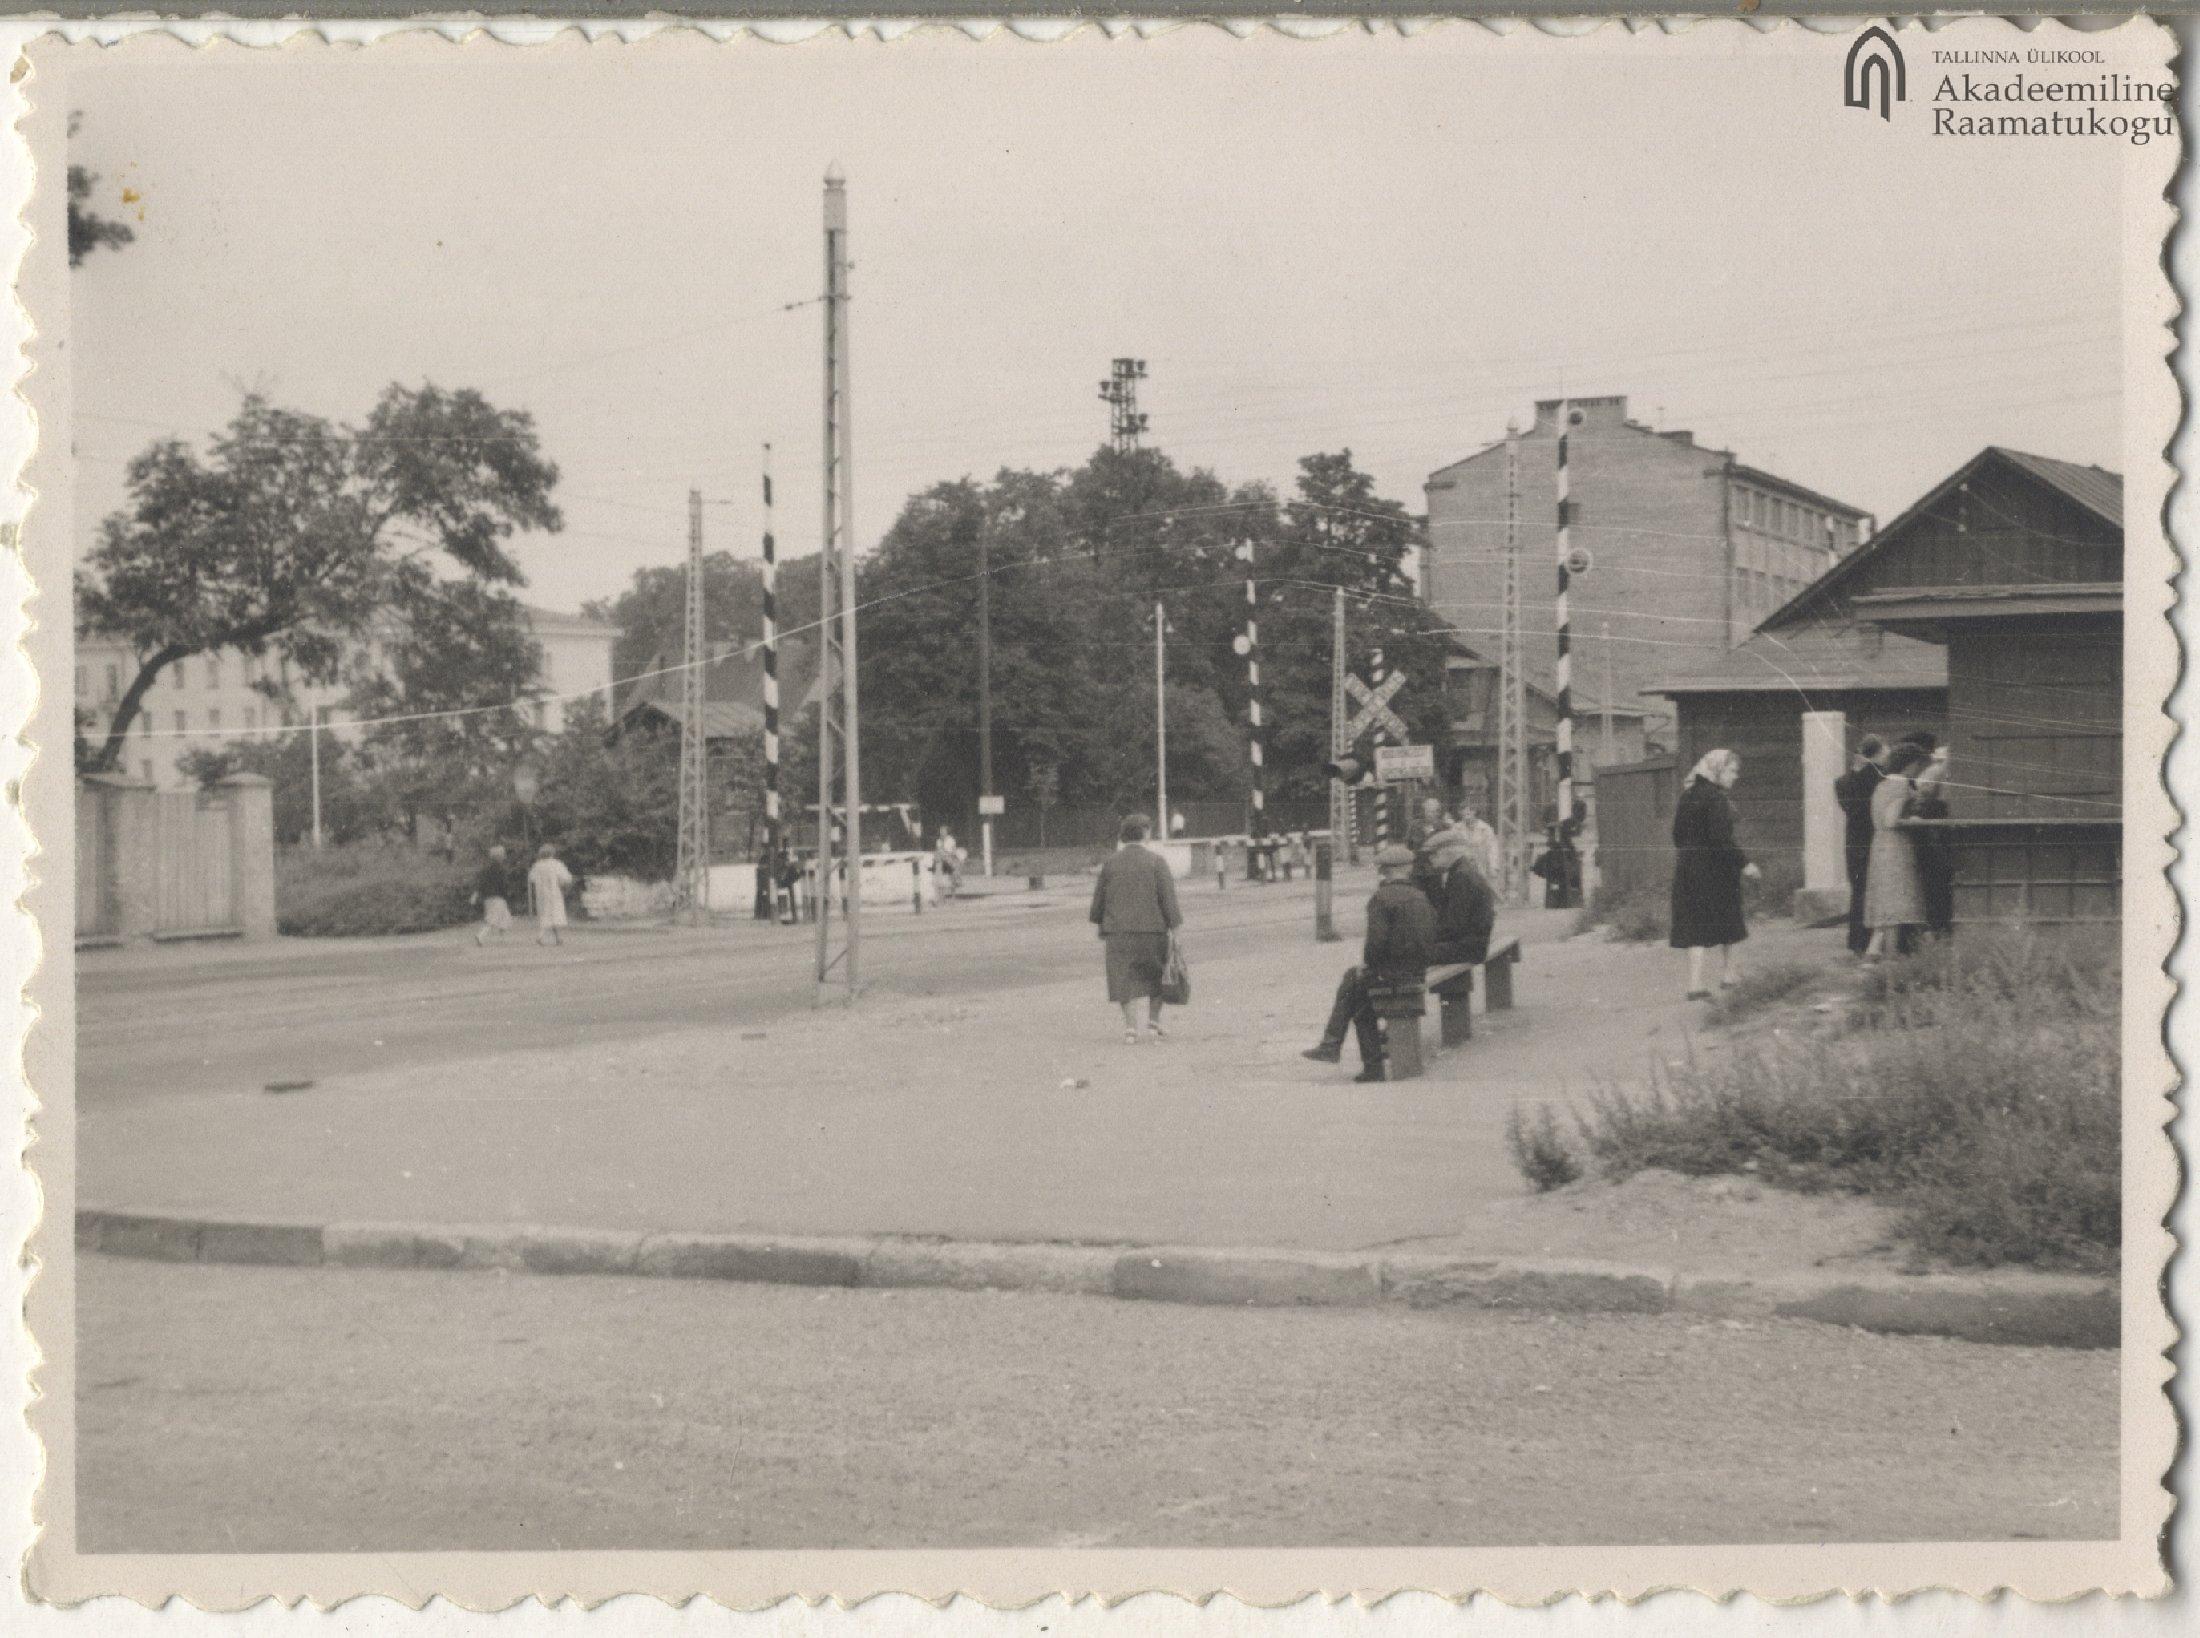 Pärnu Road Railway Railway Railway